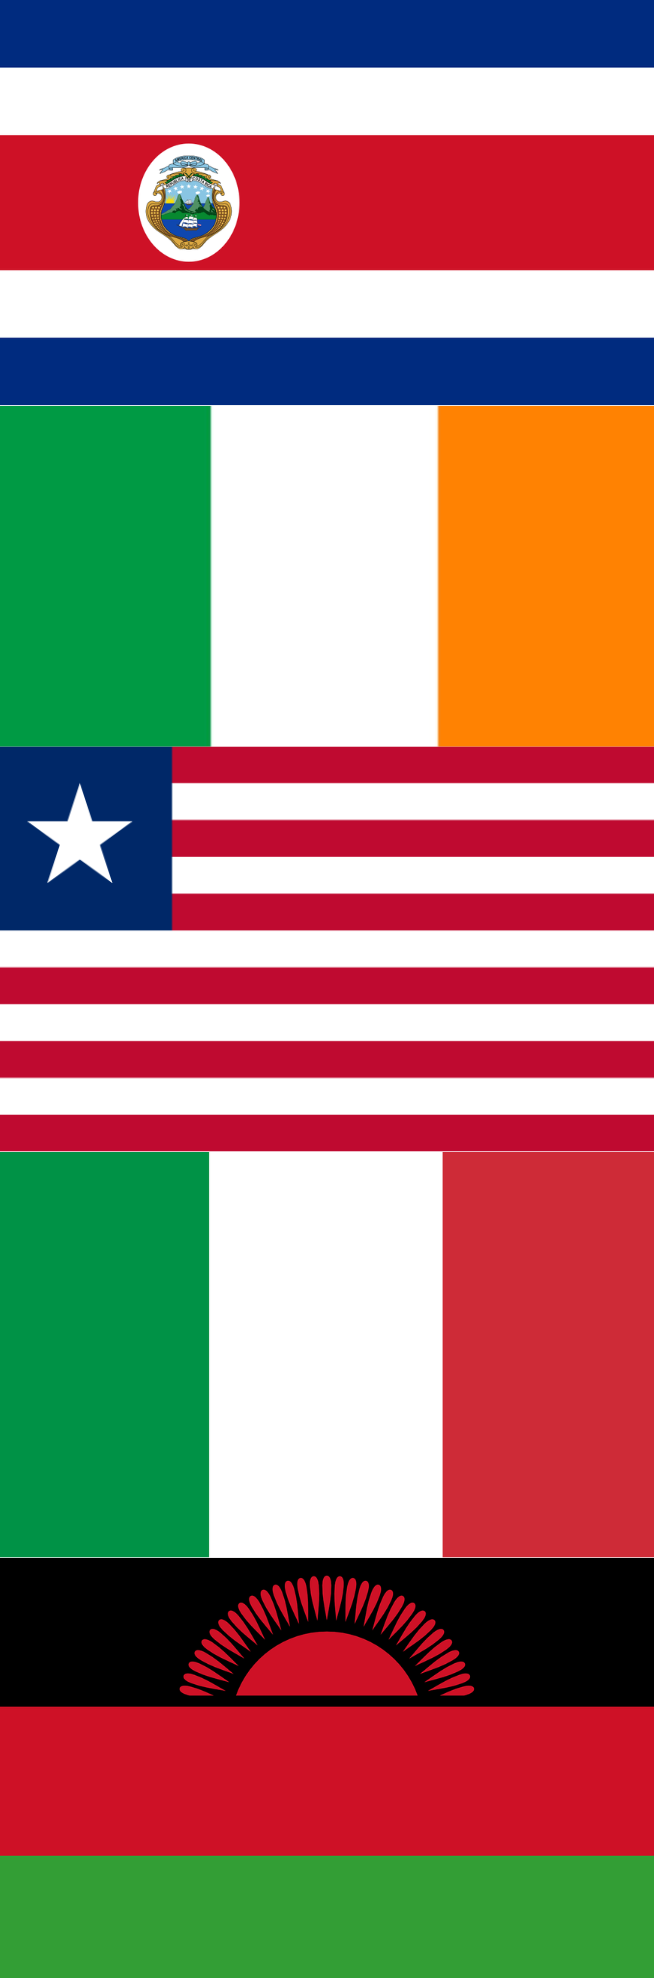 Flags of Costa Rica, Ireland, Liberia, Italy, Malawi